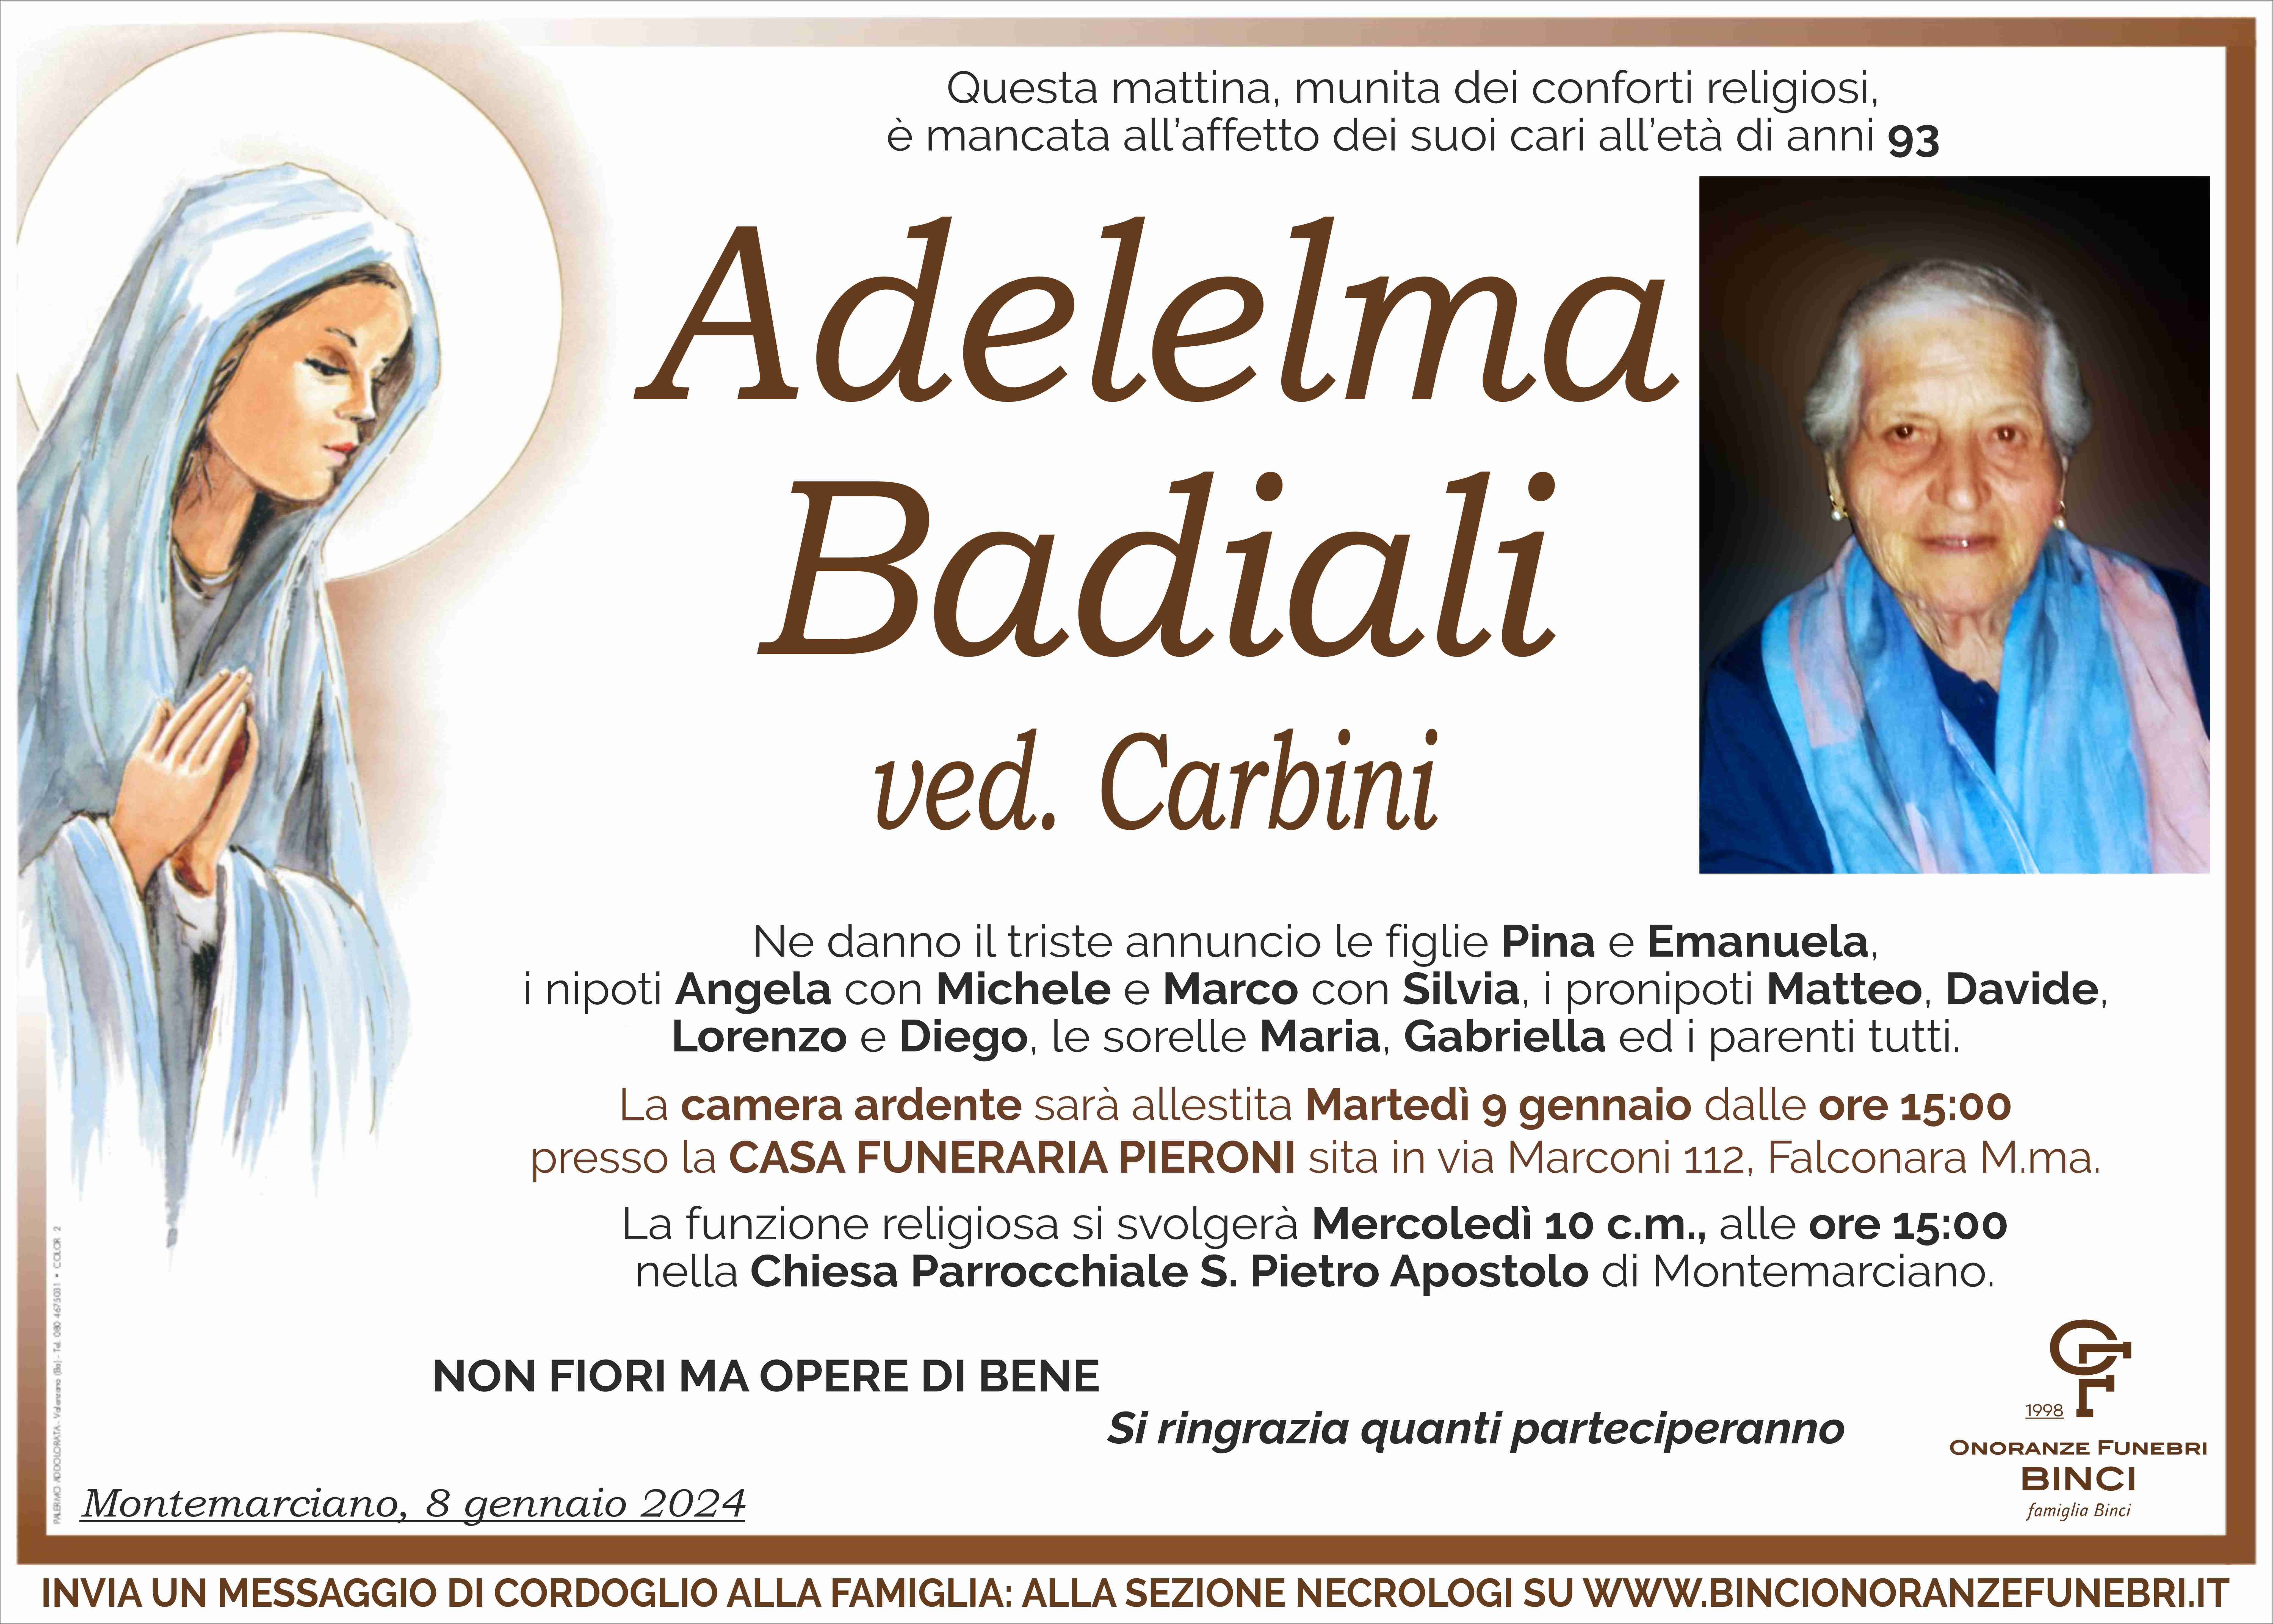 Adelelma Badiali